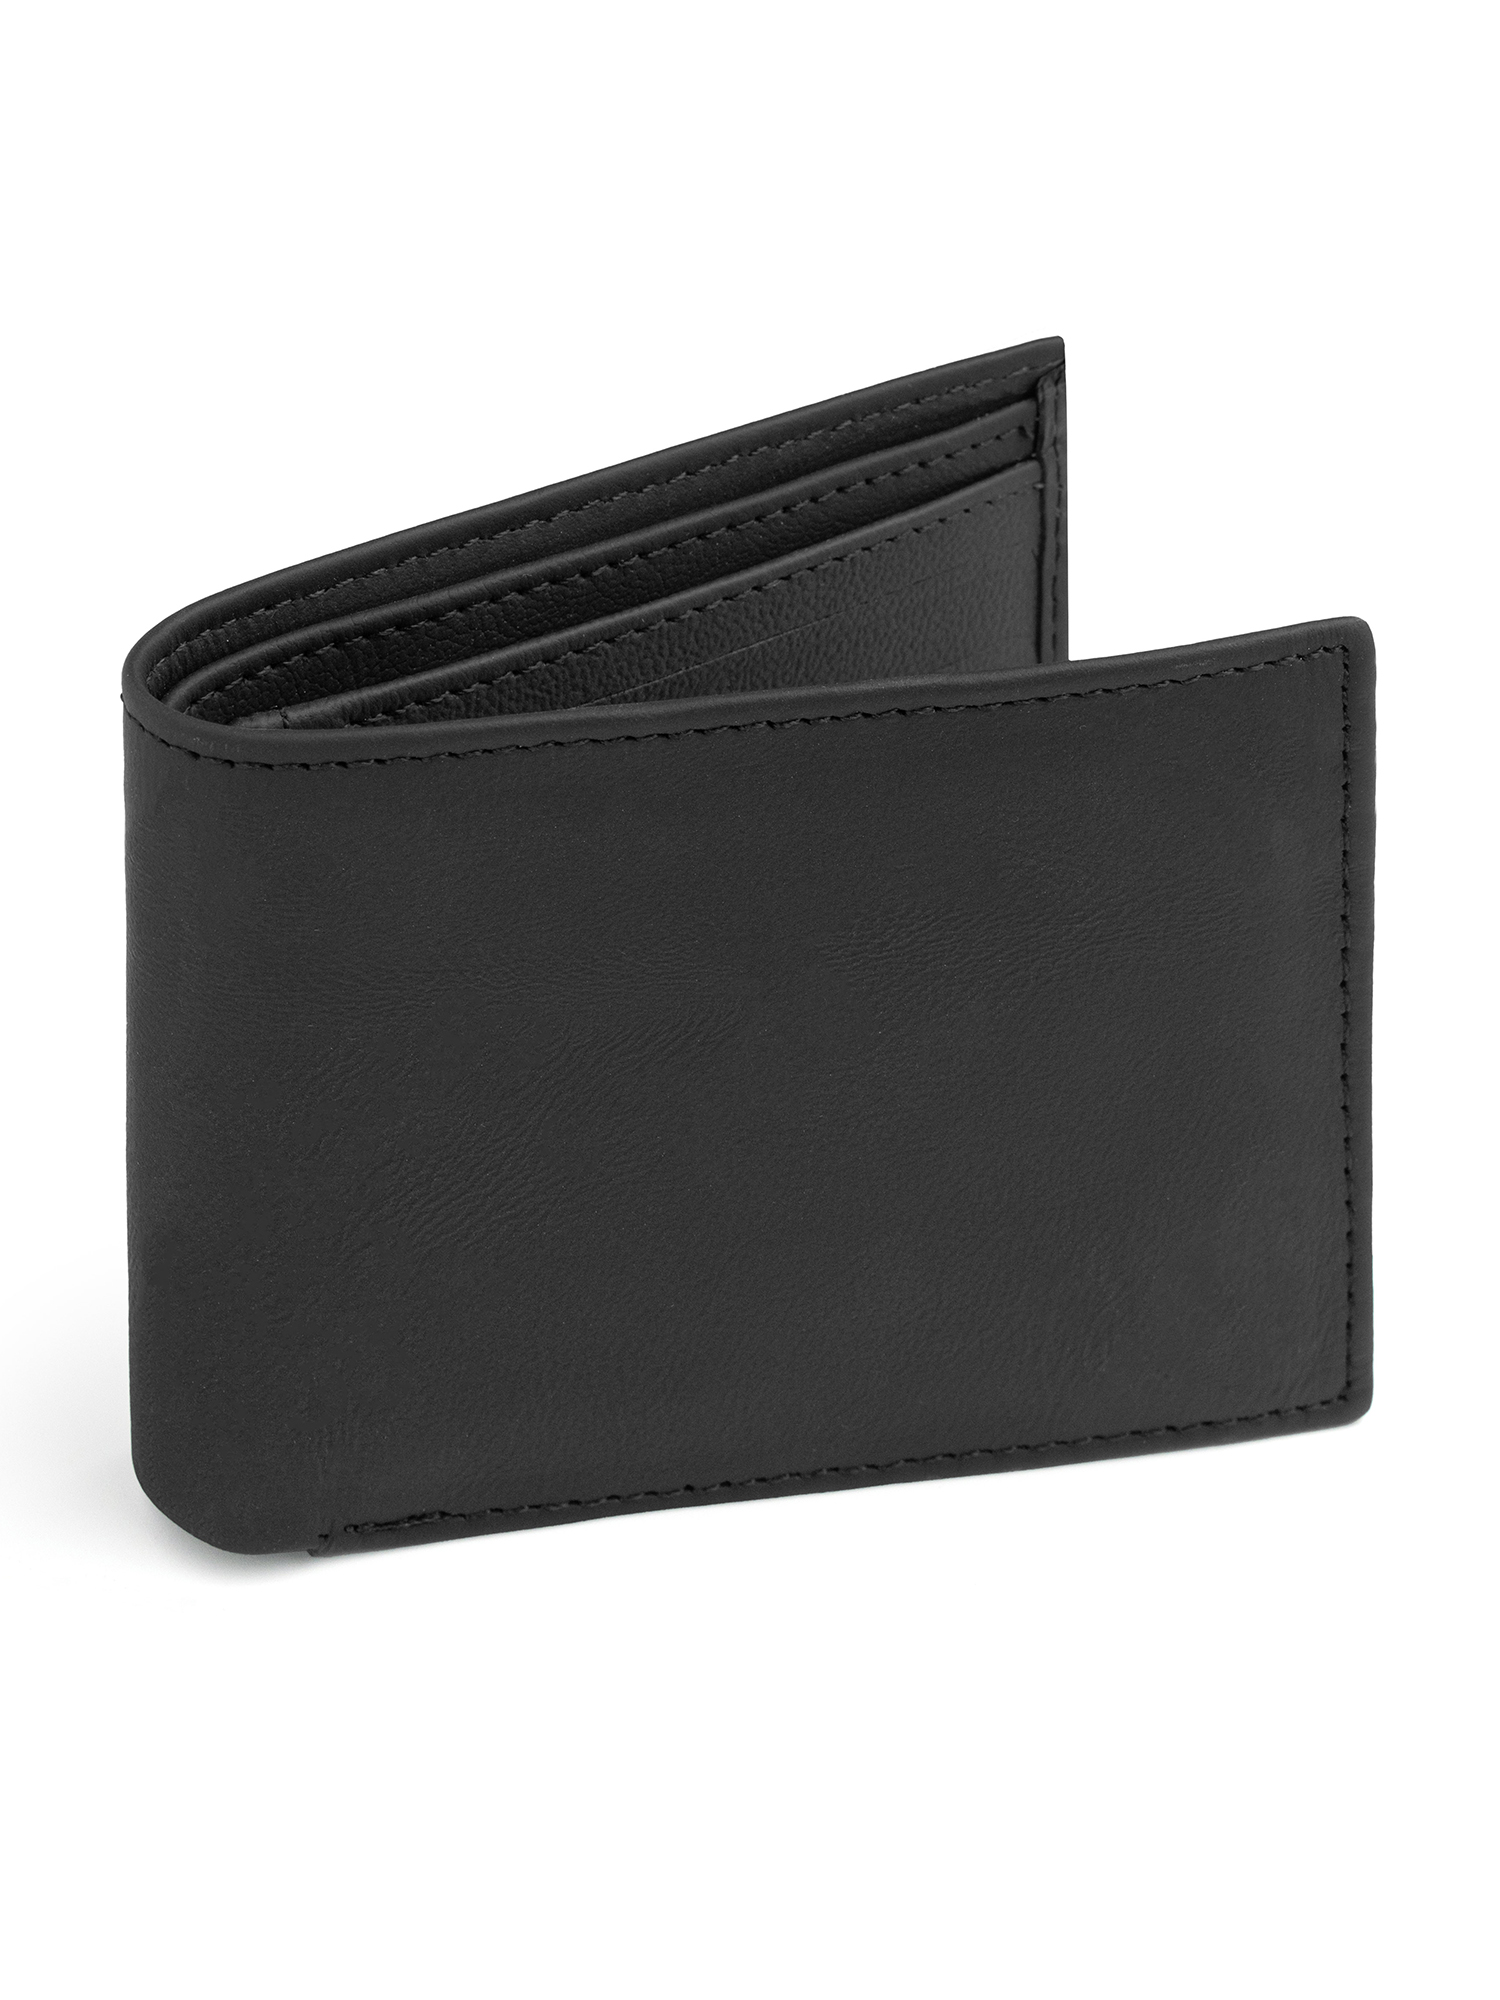 Men's Basic Black Peltskin Wallet | 100% Cow Peltskin